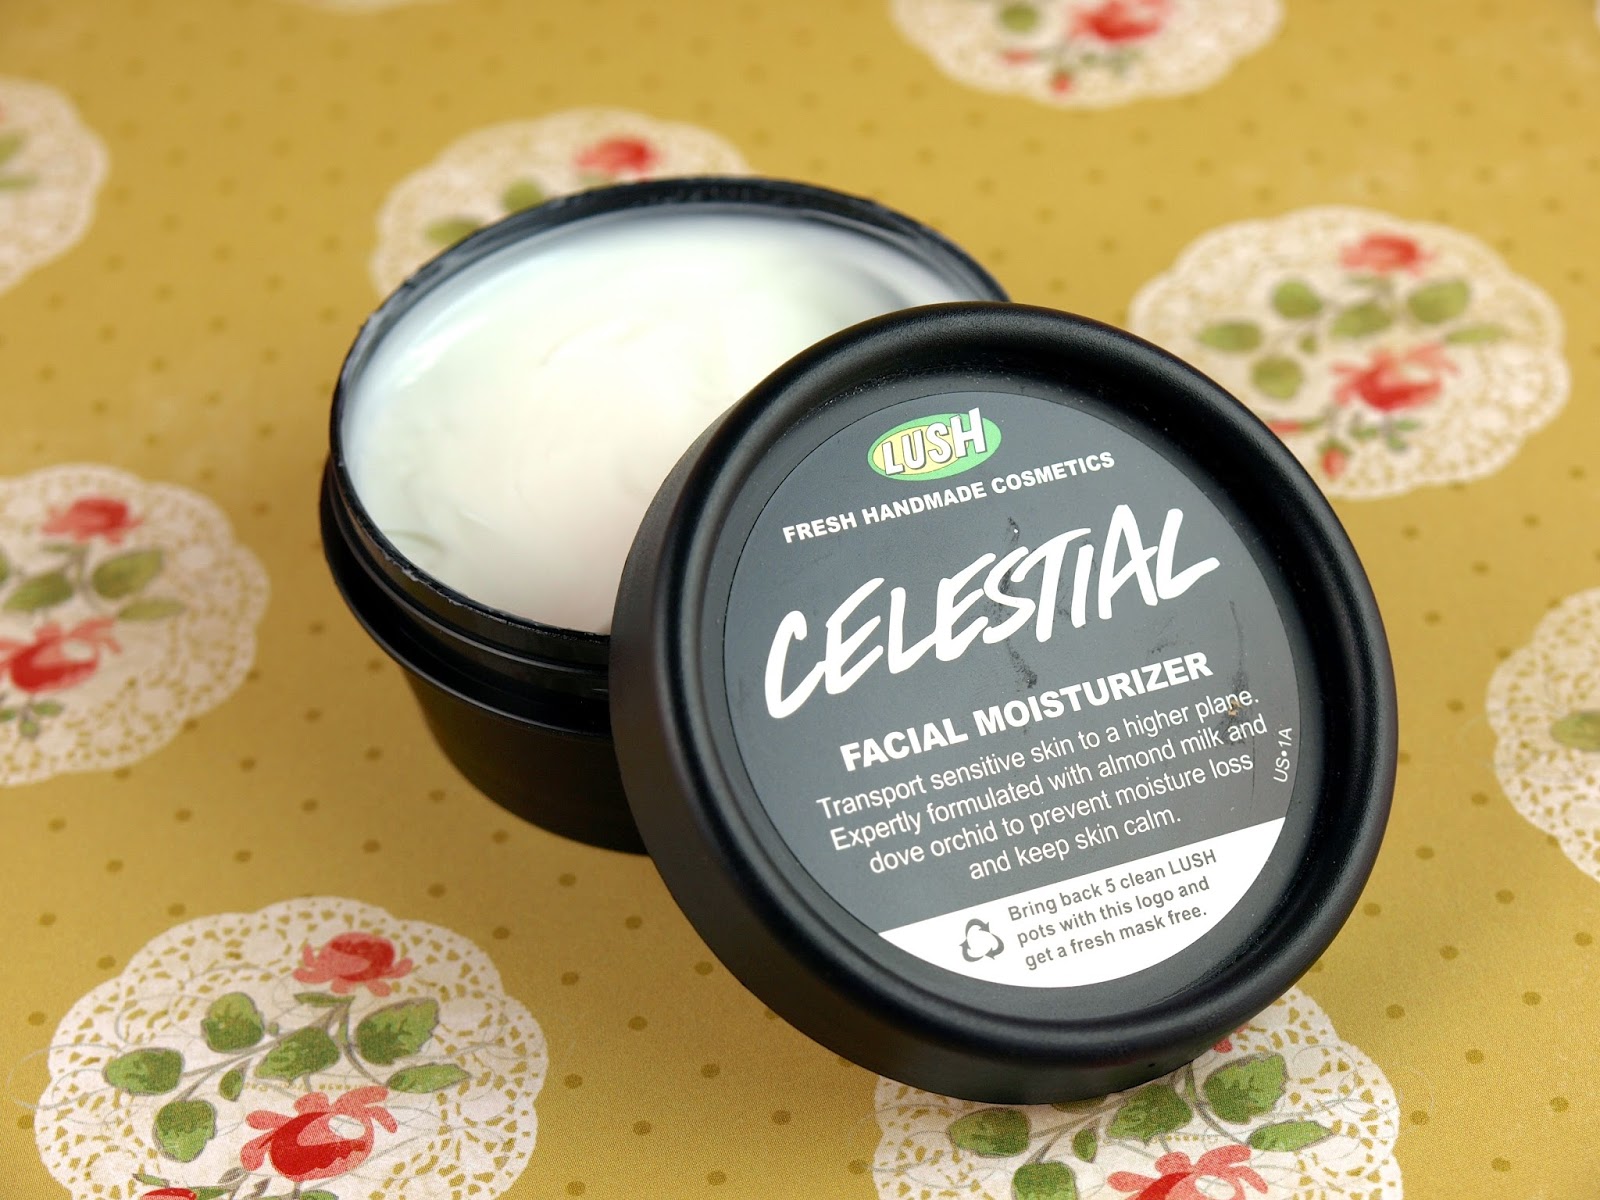 Lush Celestial Facial Moisturizer and Vanishing Cream Facial Moisturizer: Review